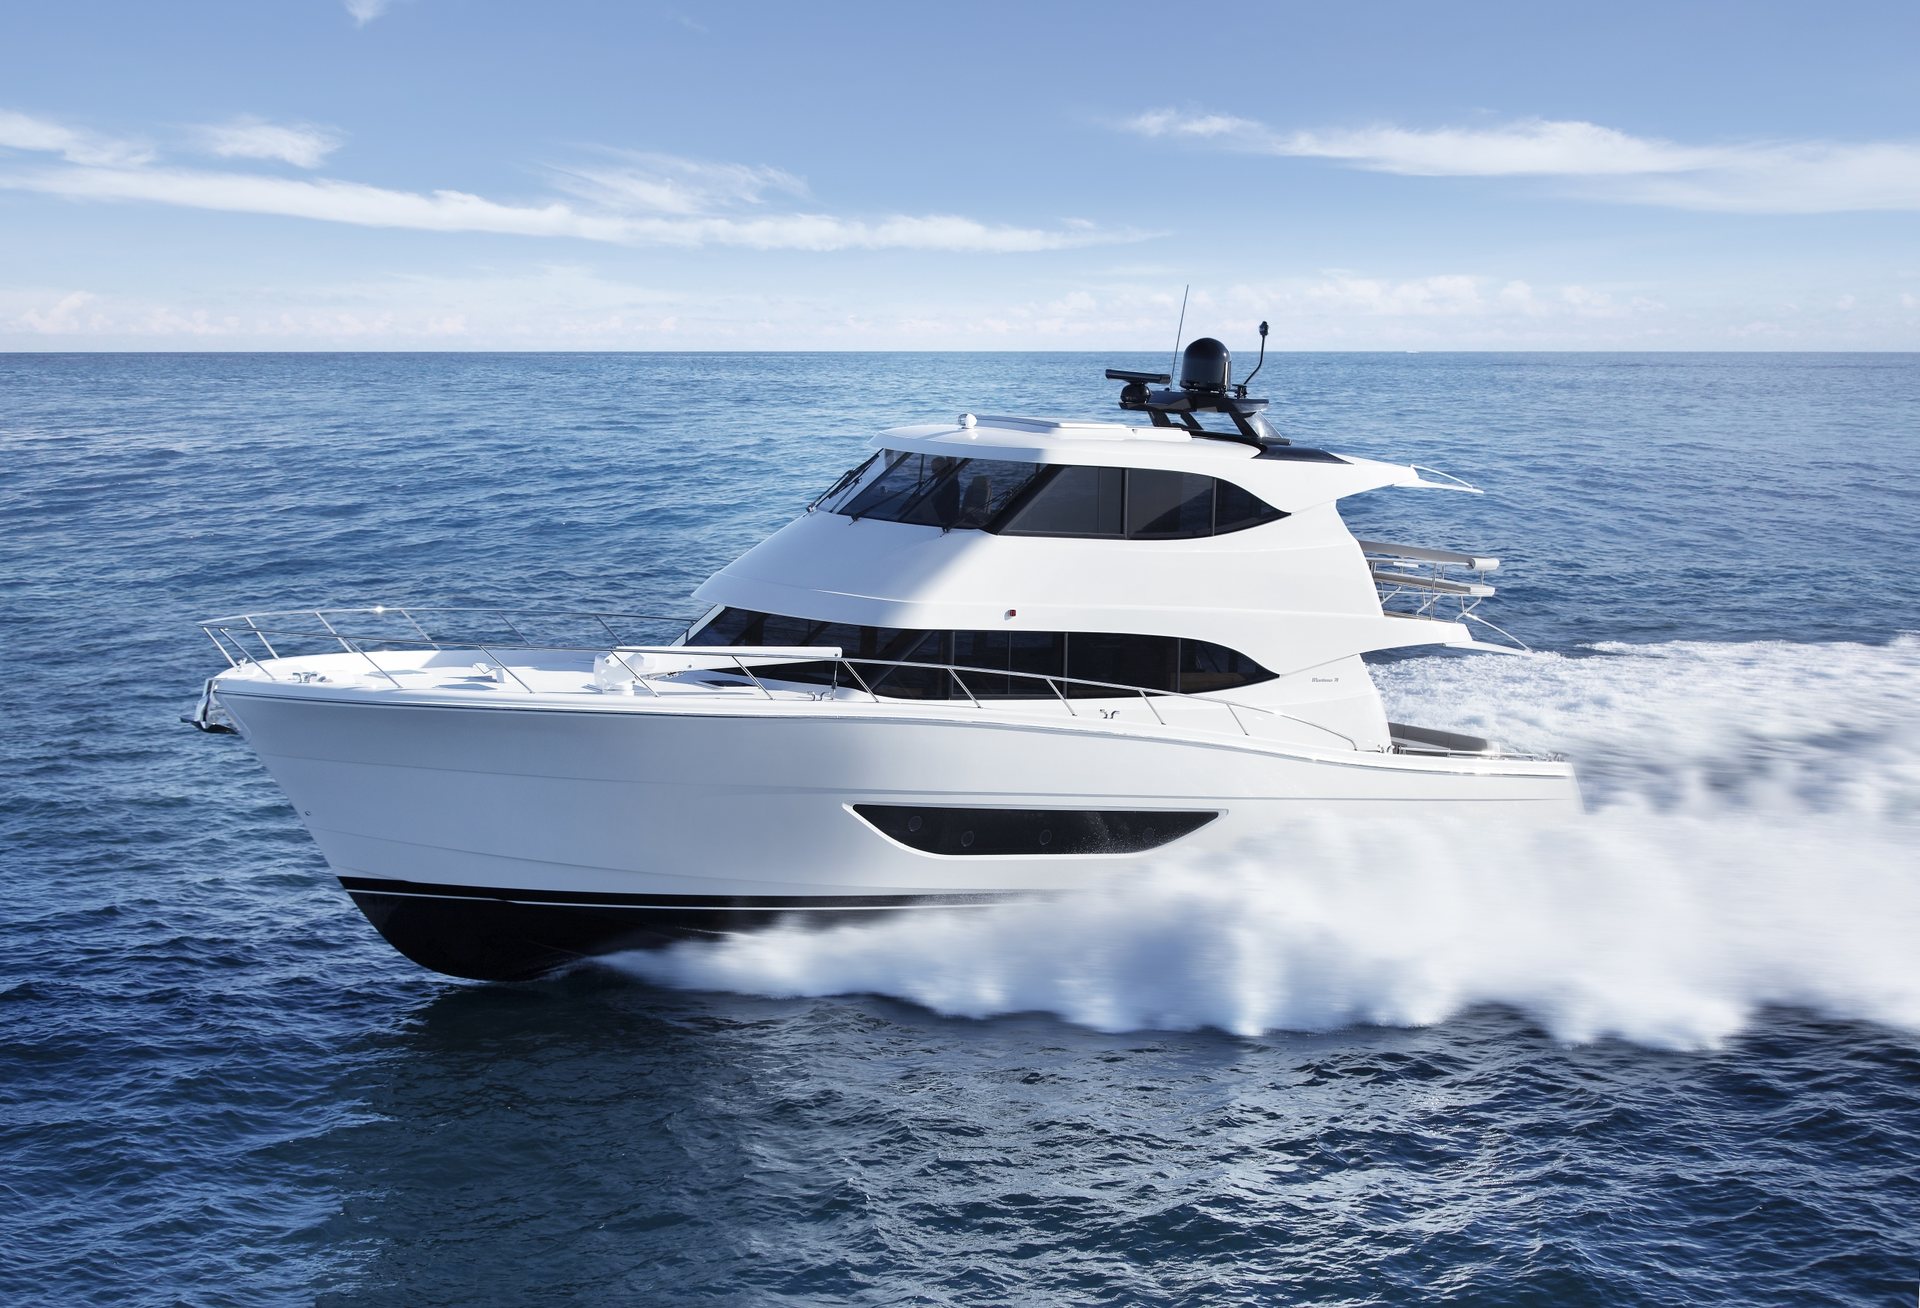 360 VR Virtual Tours of the Maritimo M70 Motoryacht